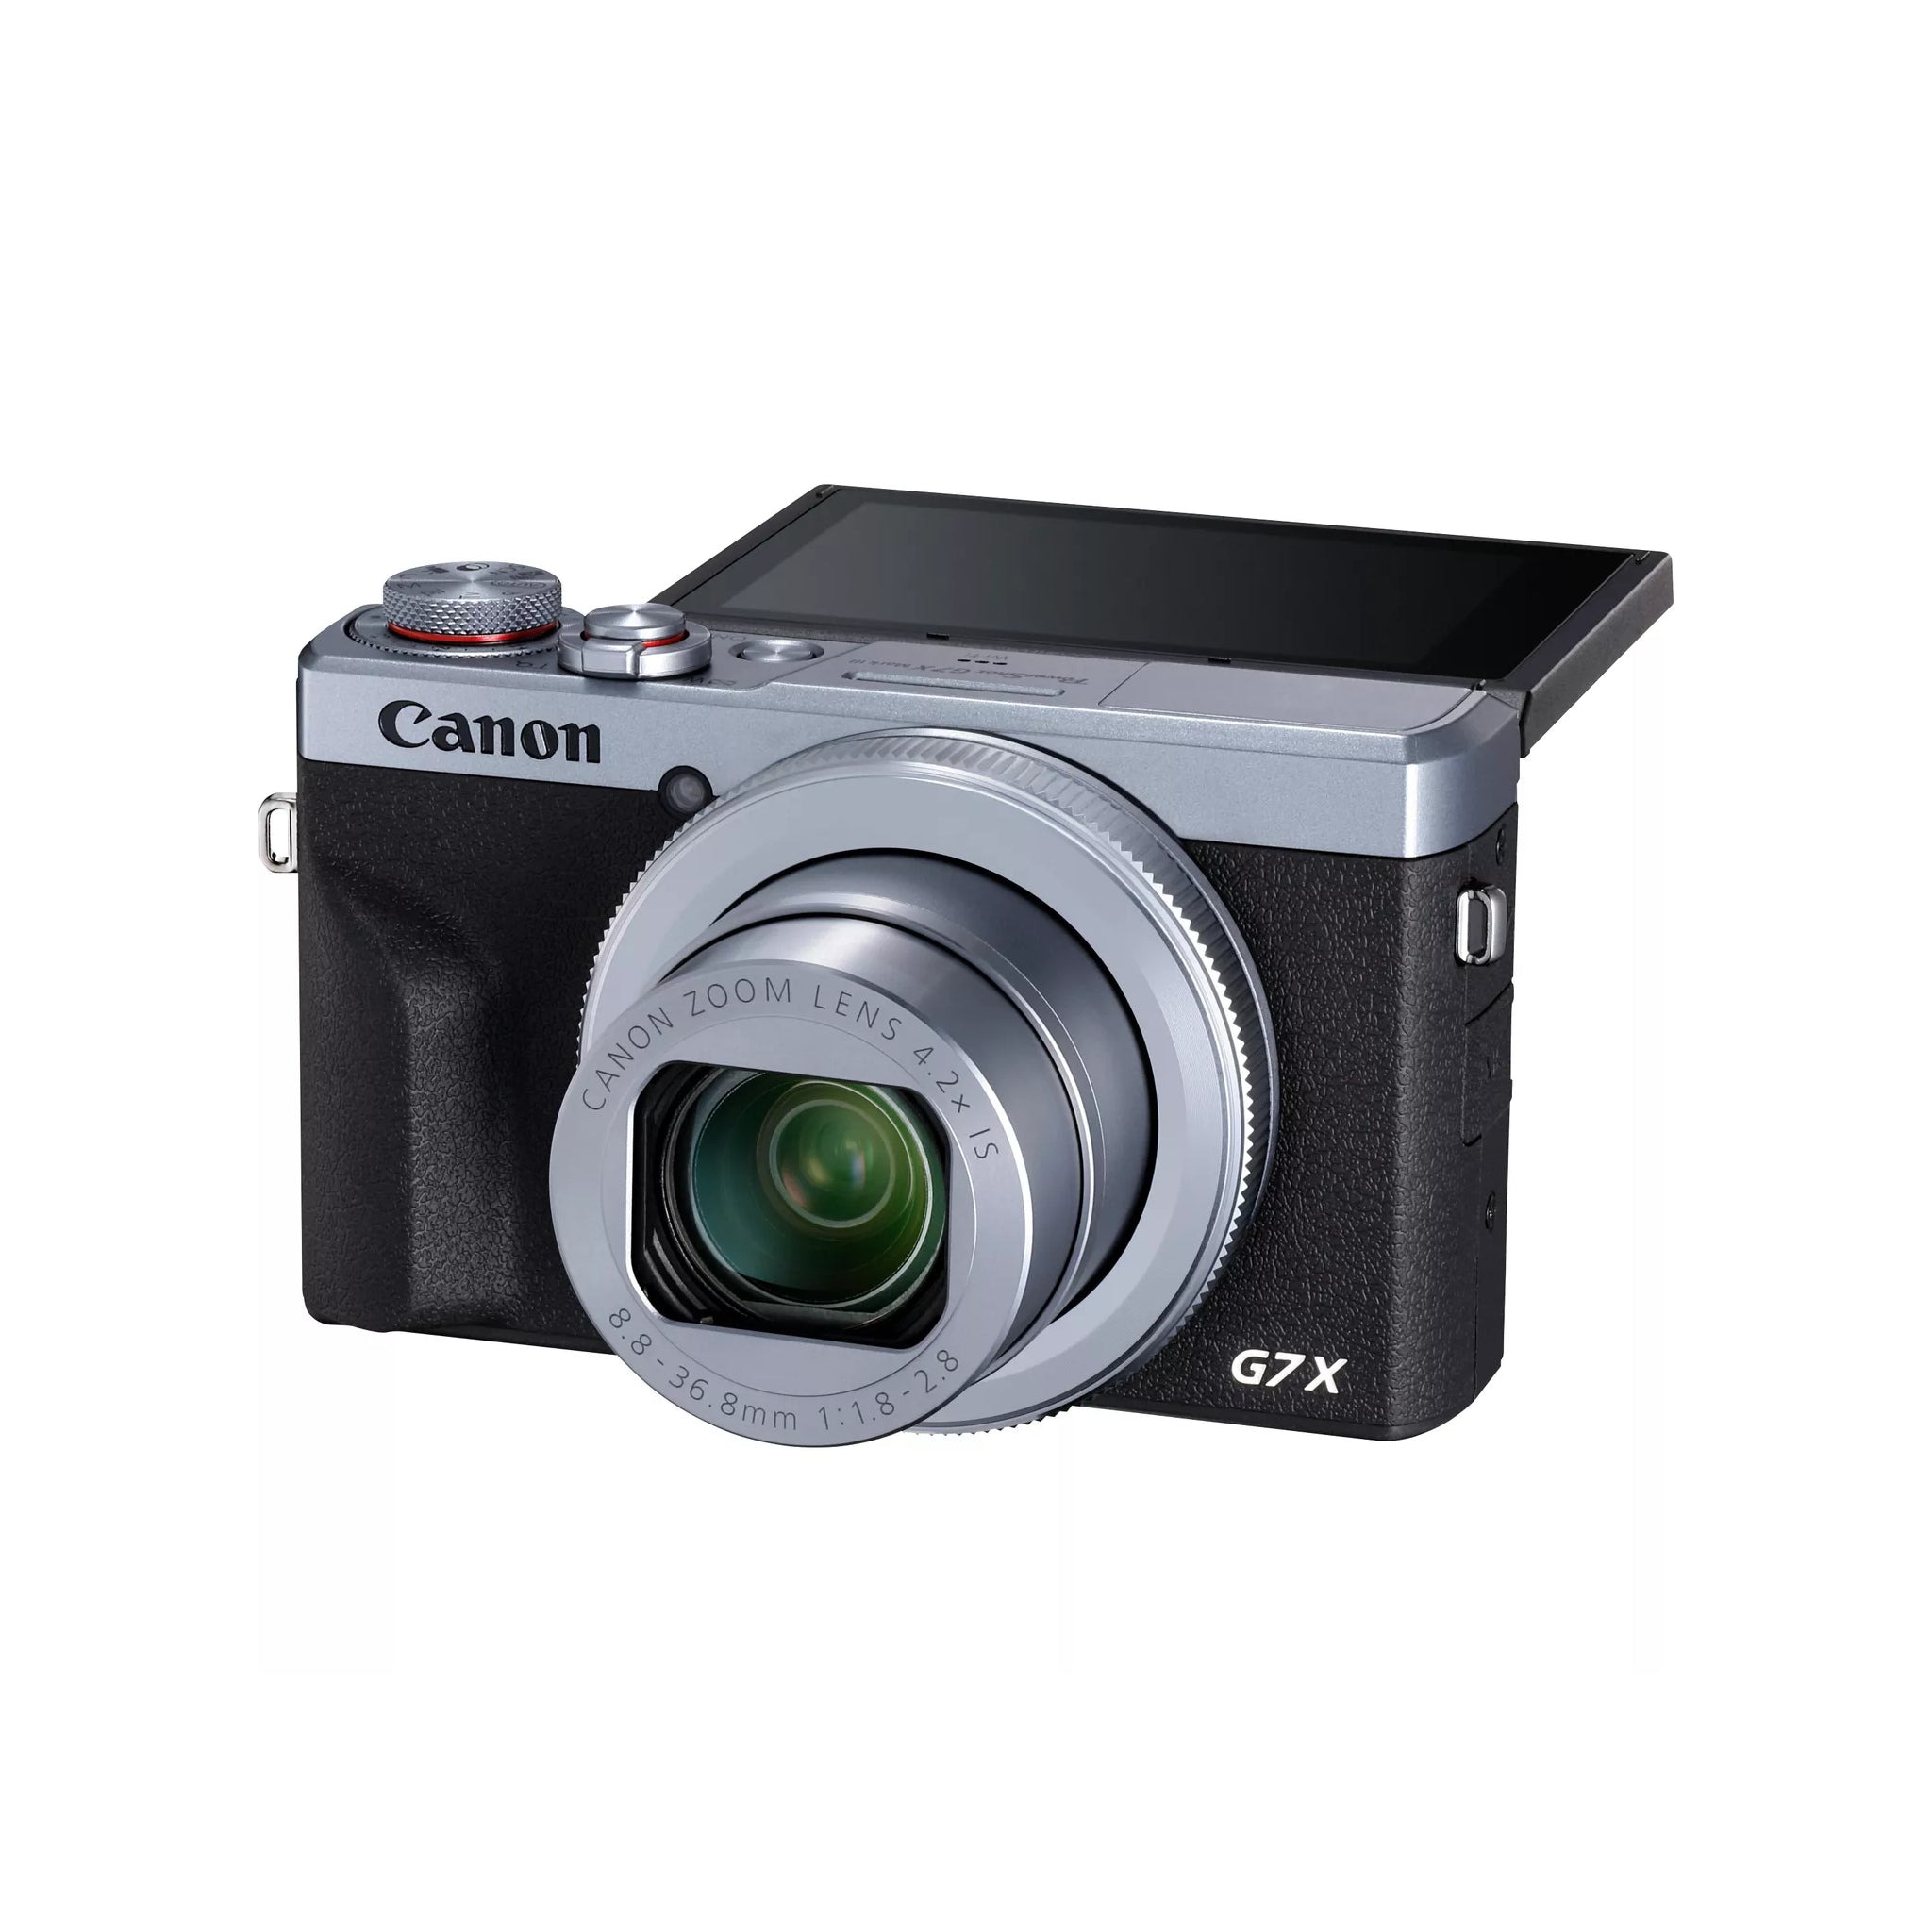 Canon Powershot G7X mk iii compact camera